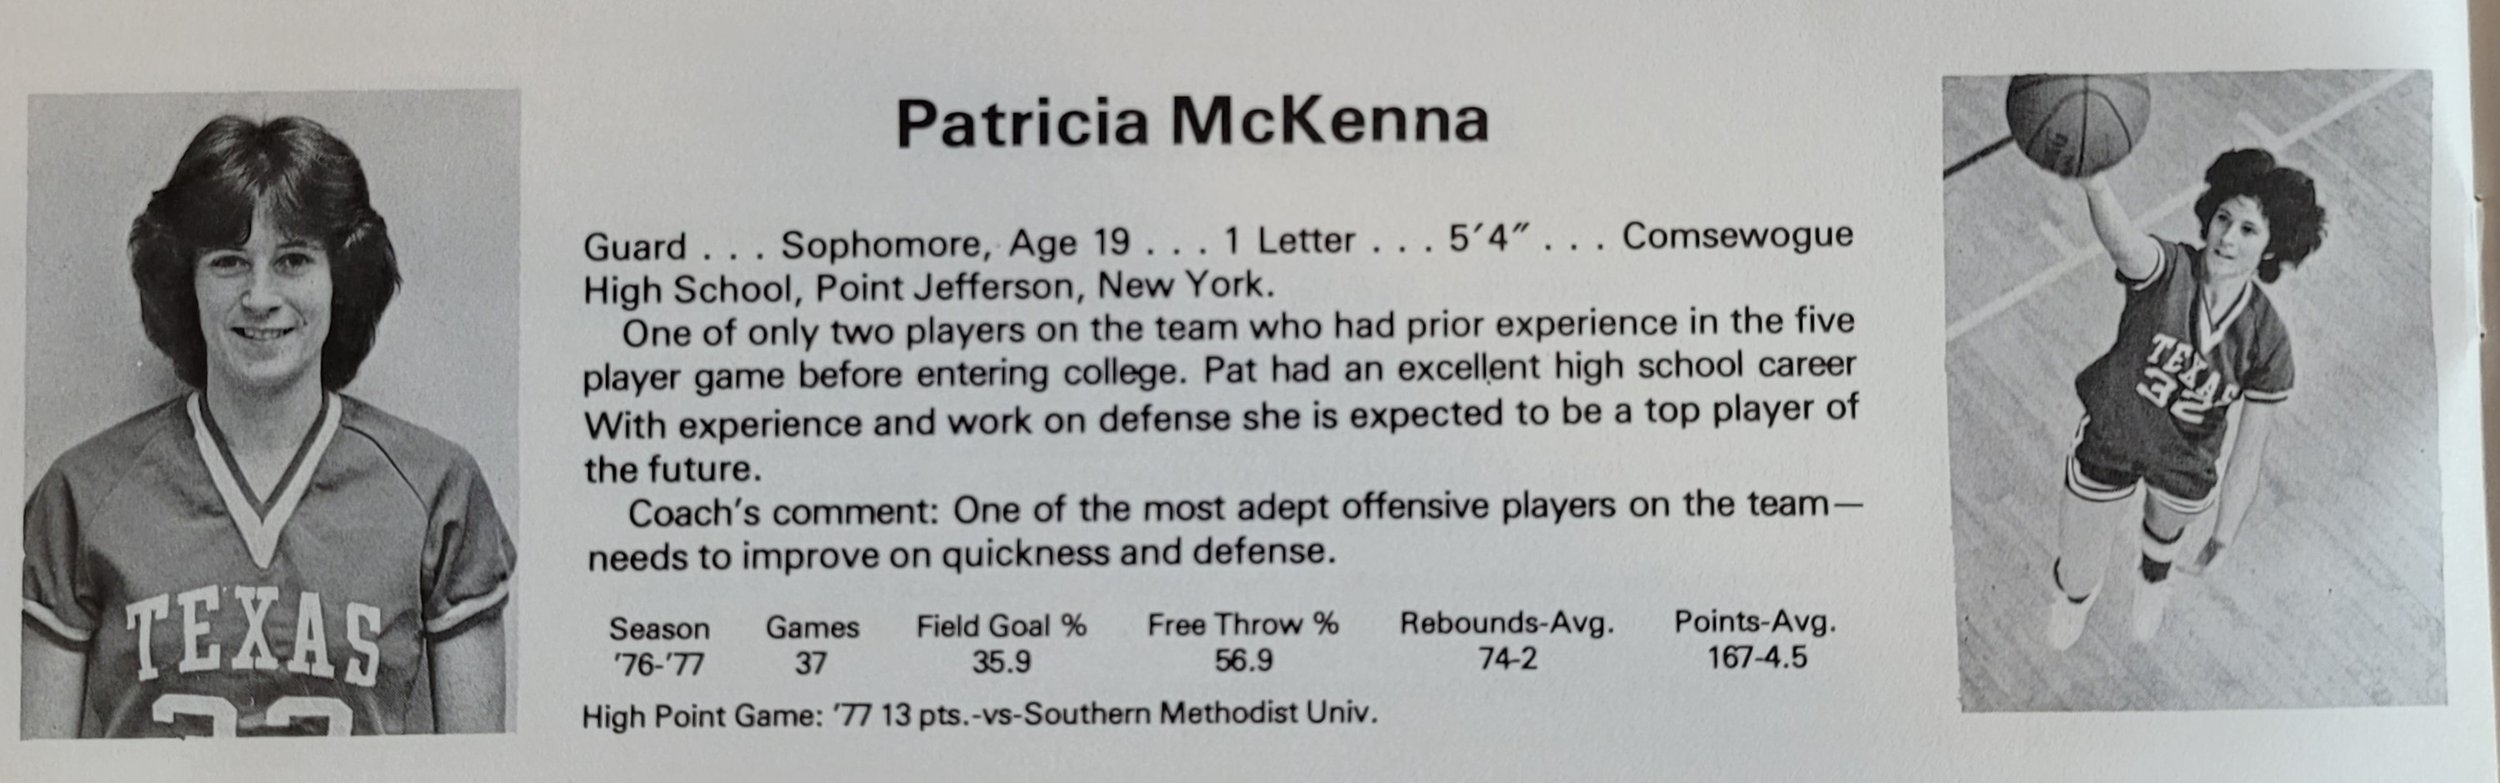 Patricia McKenna 